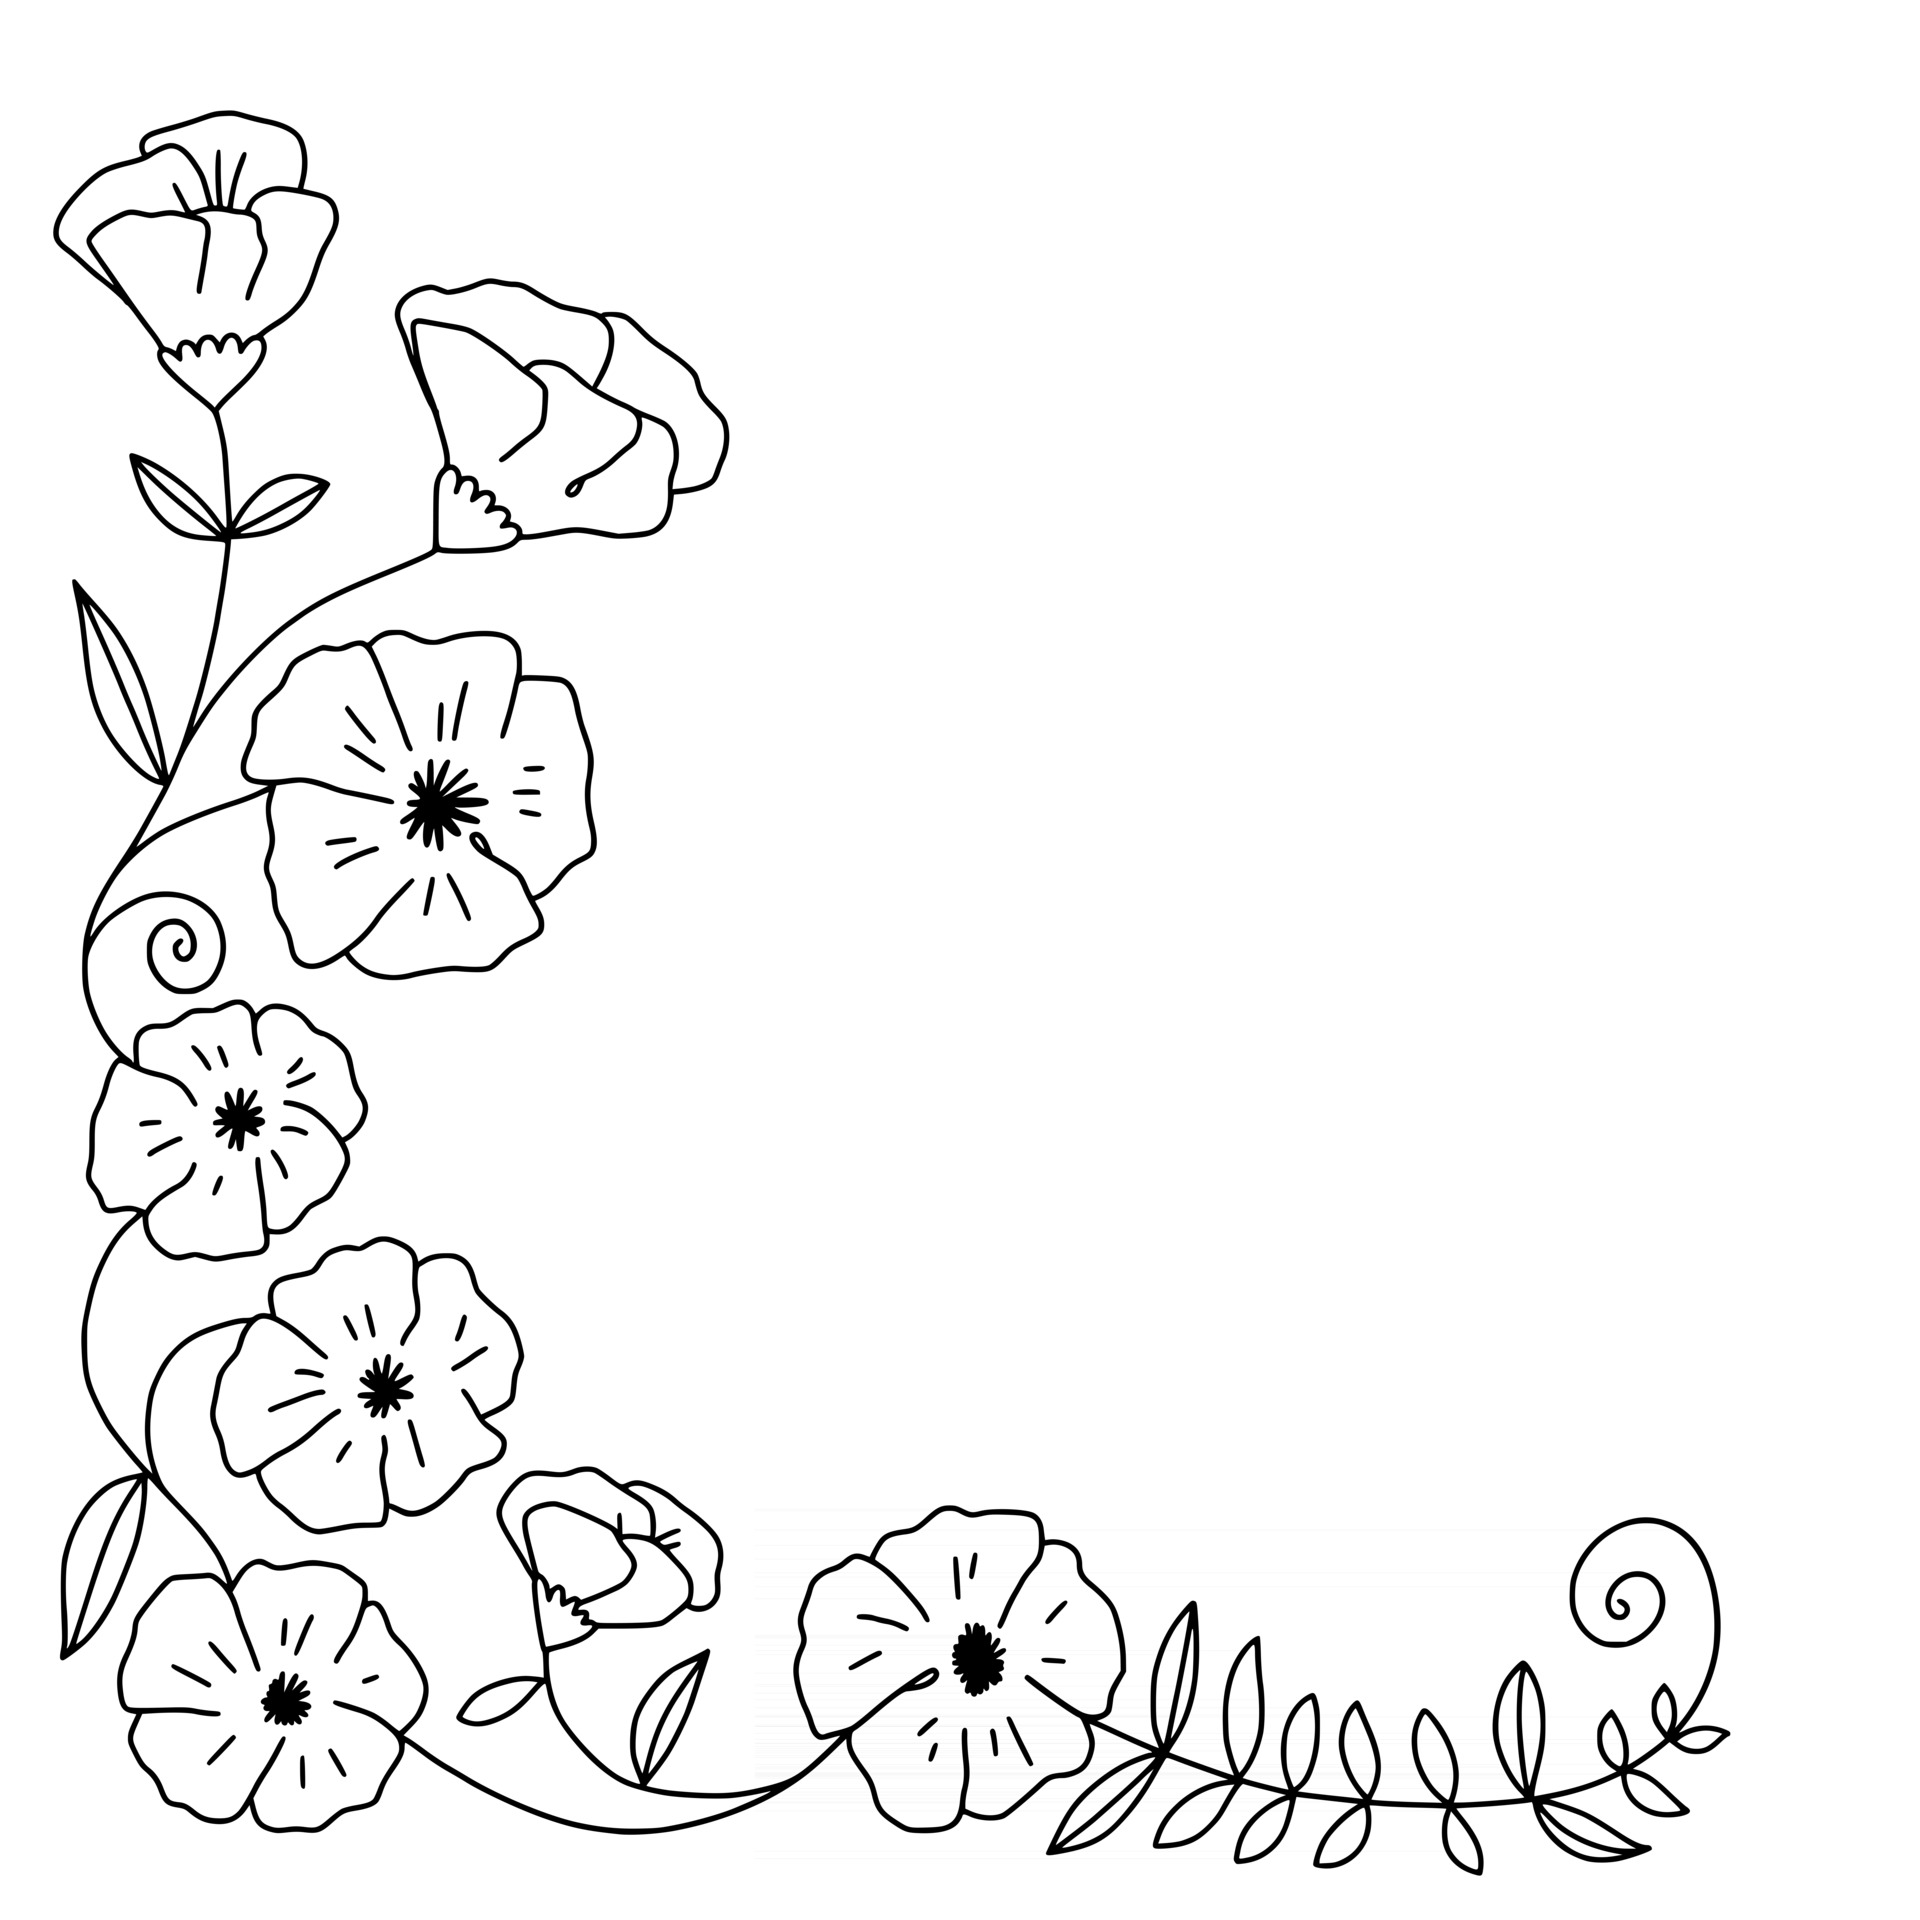 Floral Corner-Border - Sketch by Shaunery on deviantART | Flower drawing,  Easy flower drawings, Flower line drawings